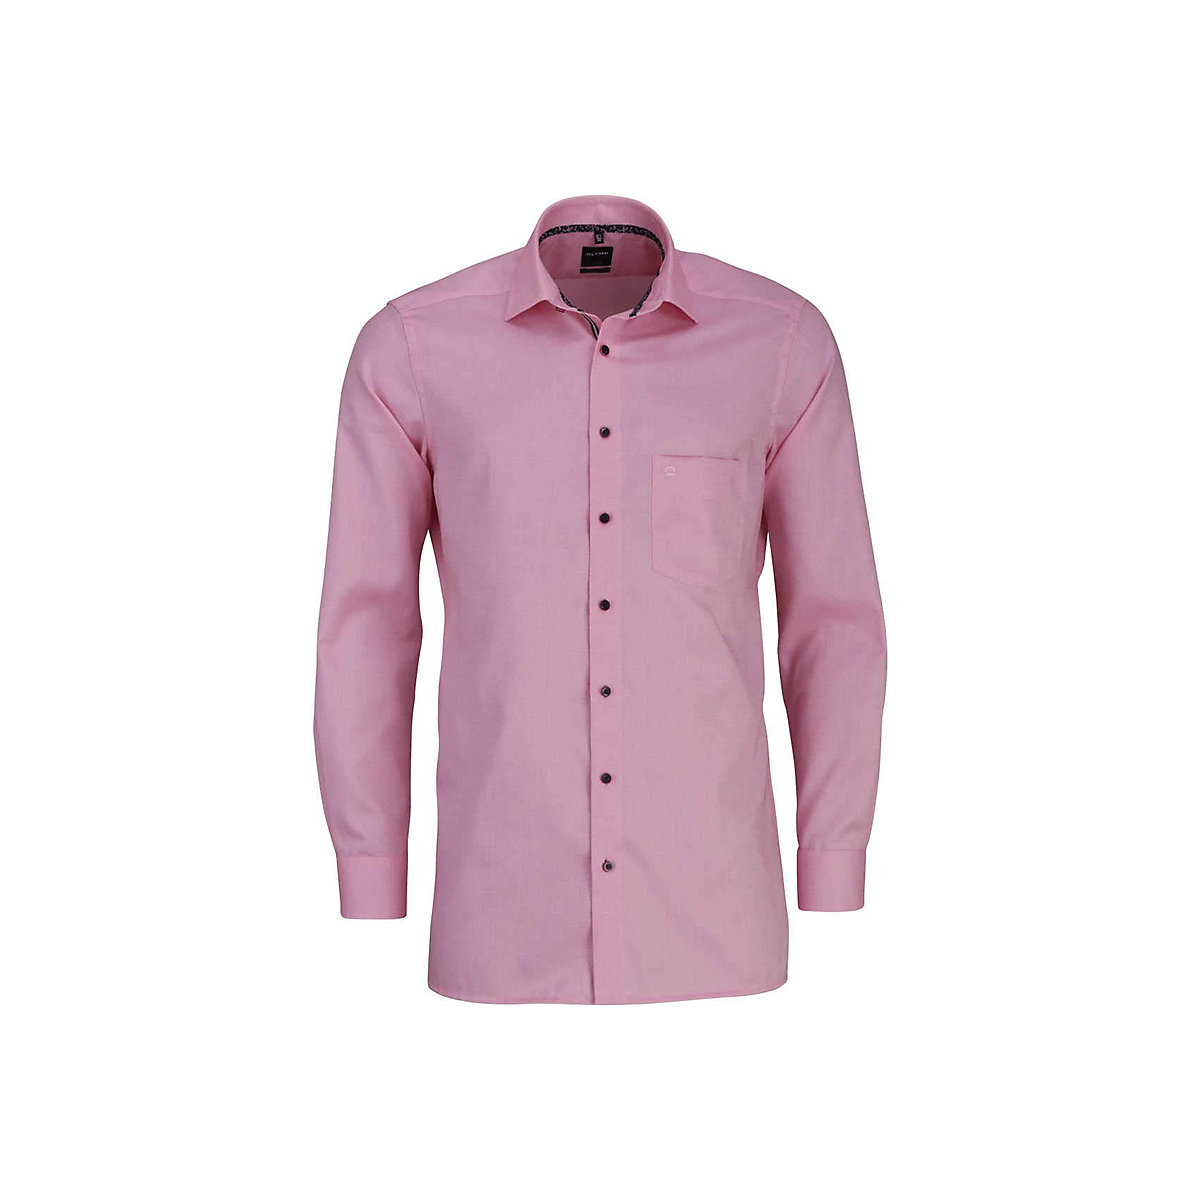 OLYMP Hemden pink